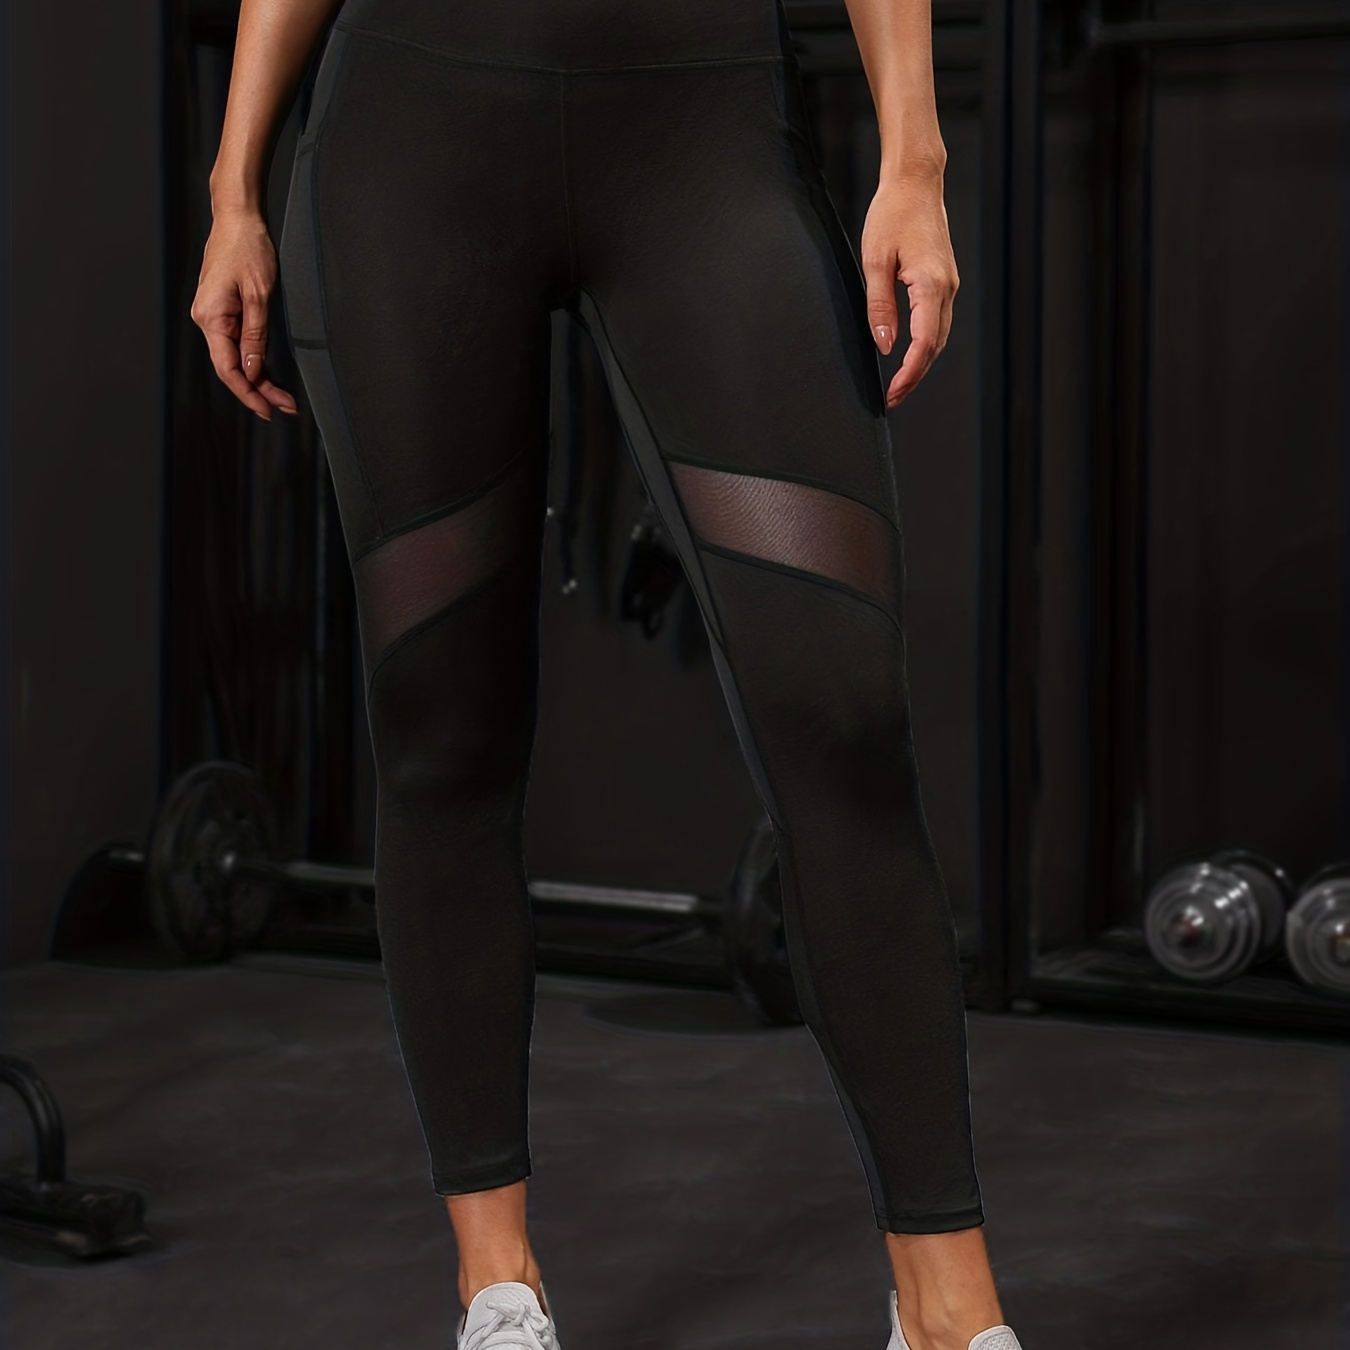 

Women's Classic Black Spliced Mesh Sports Yoga Leggings - Sexy Tight-fitting & Stretchy For Maximum Comfort!